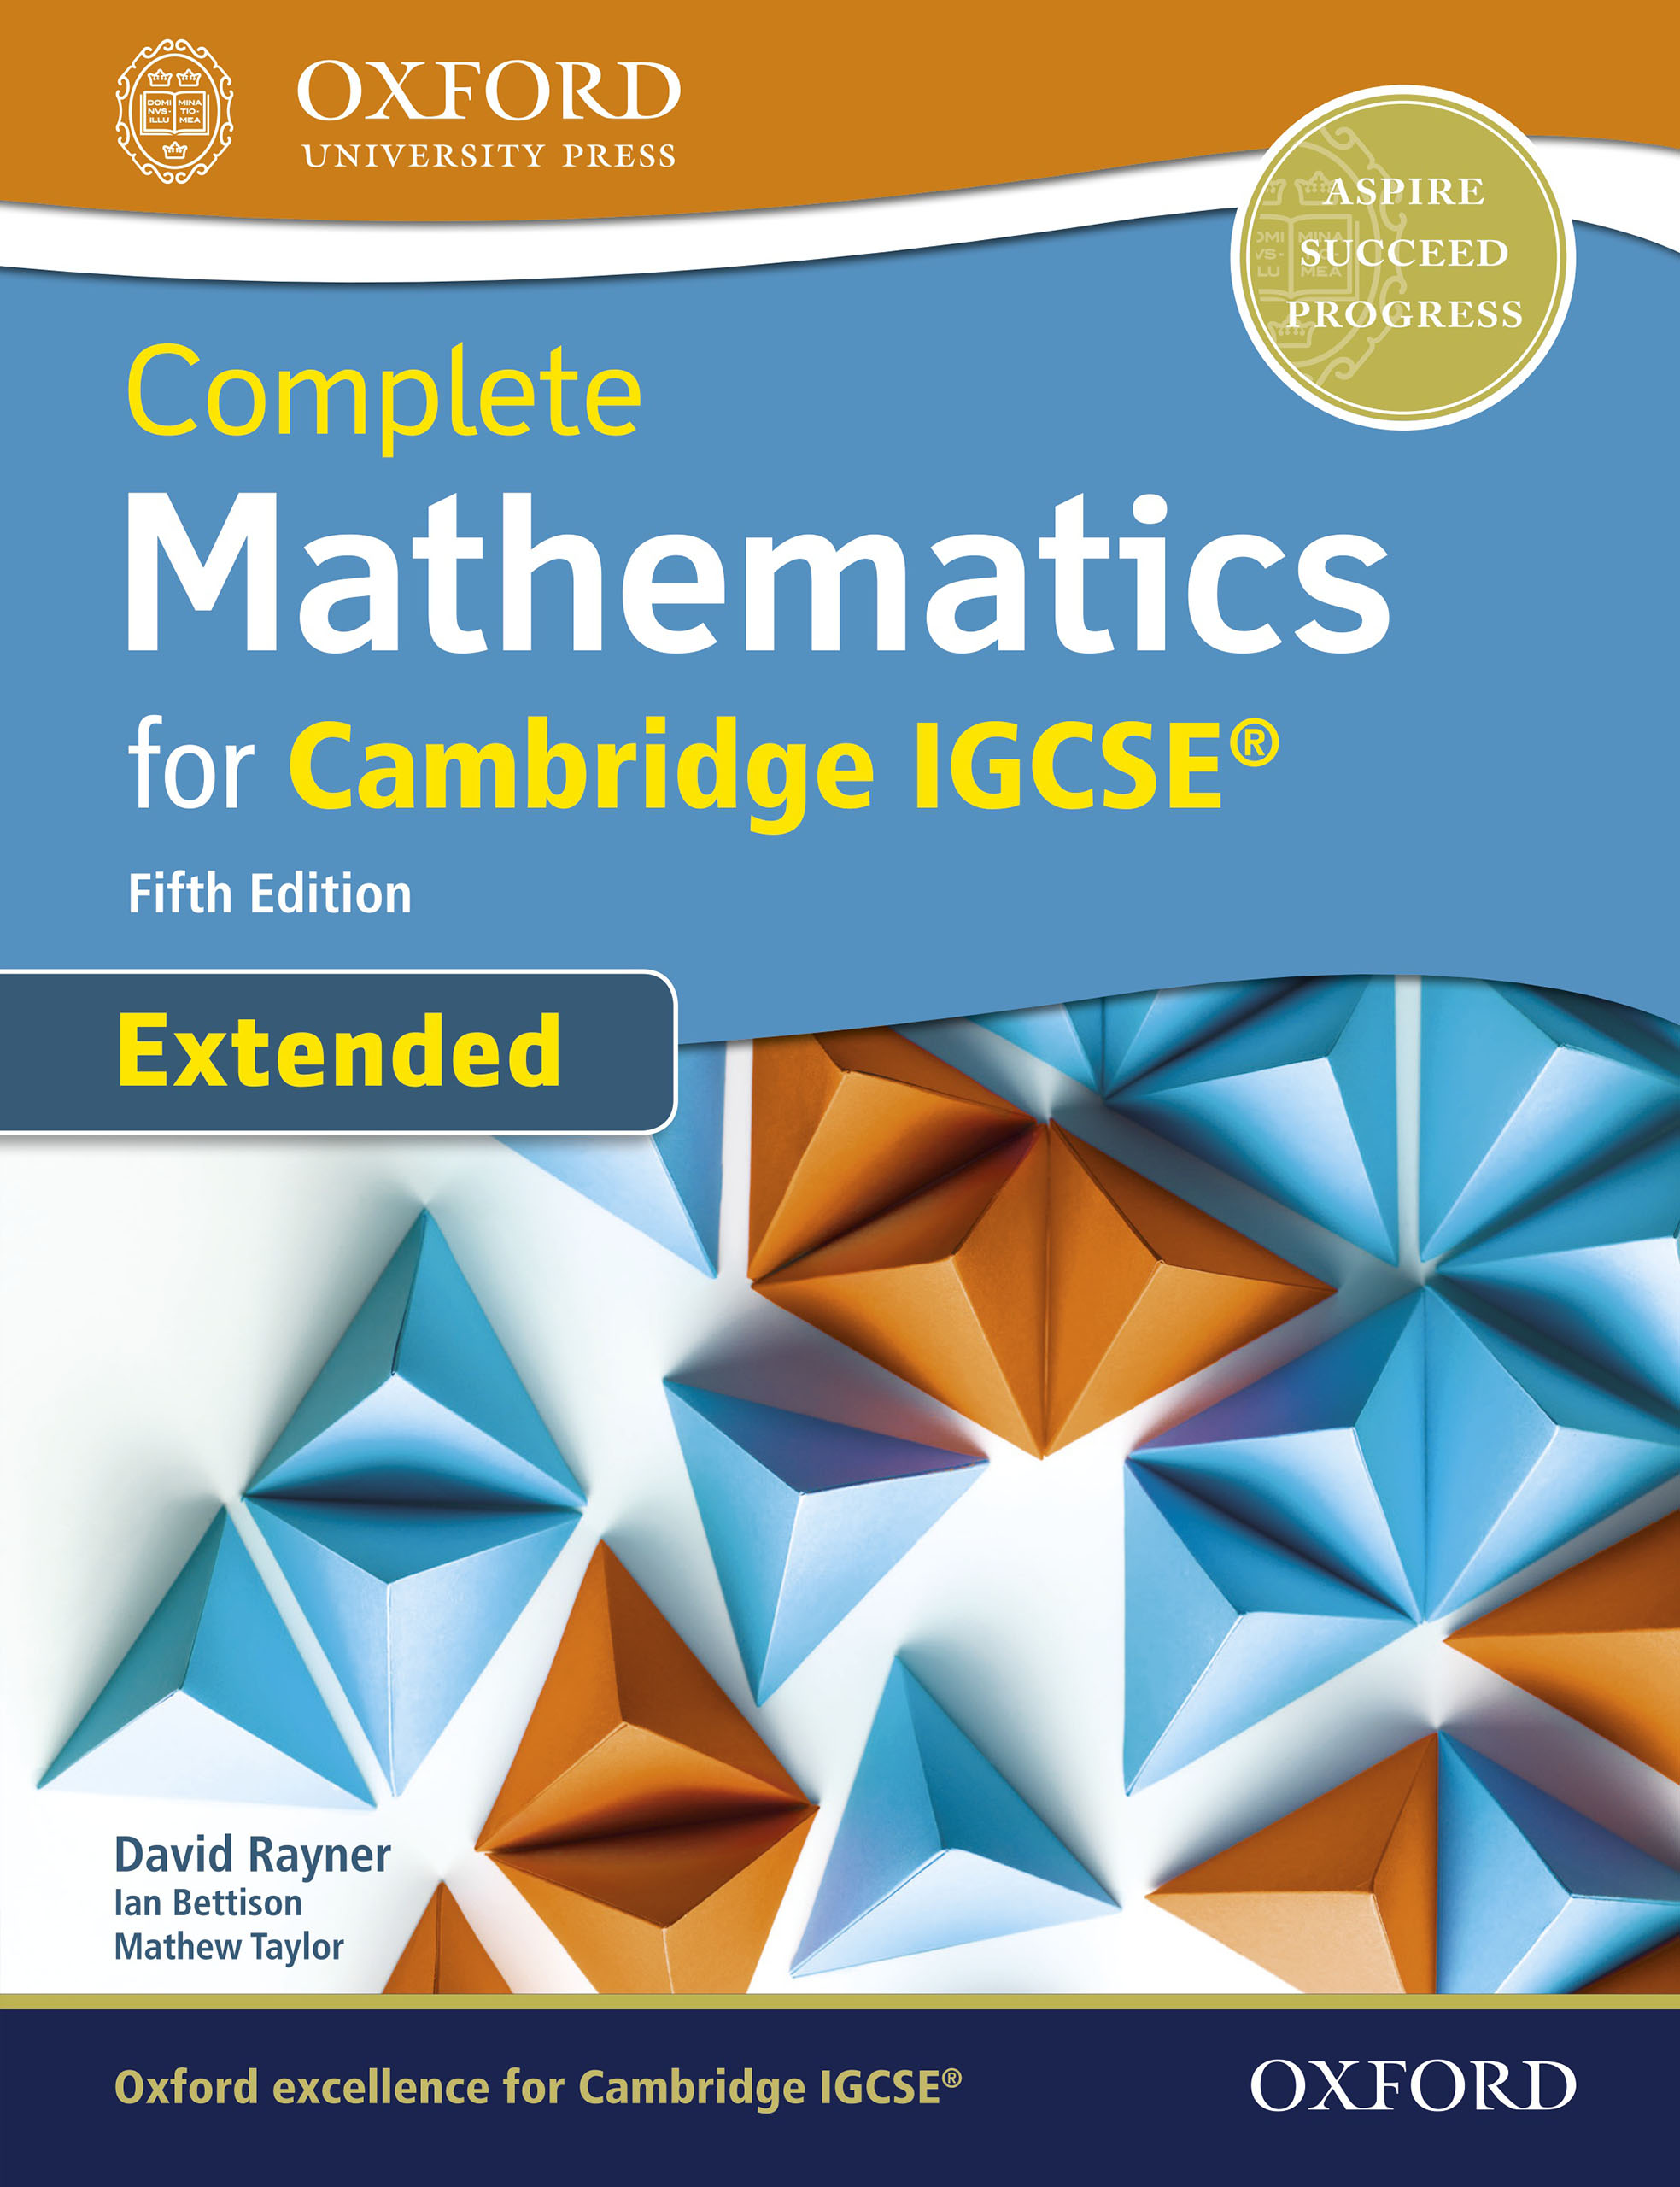 book review of mathematics textbook